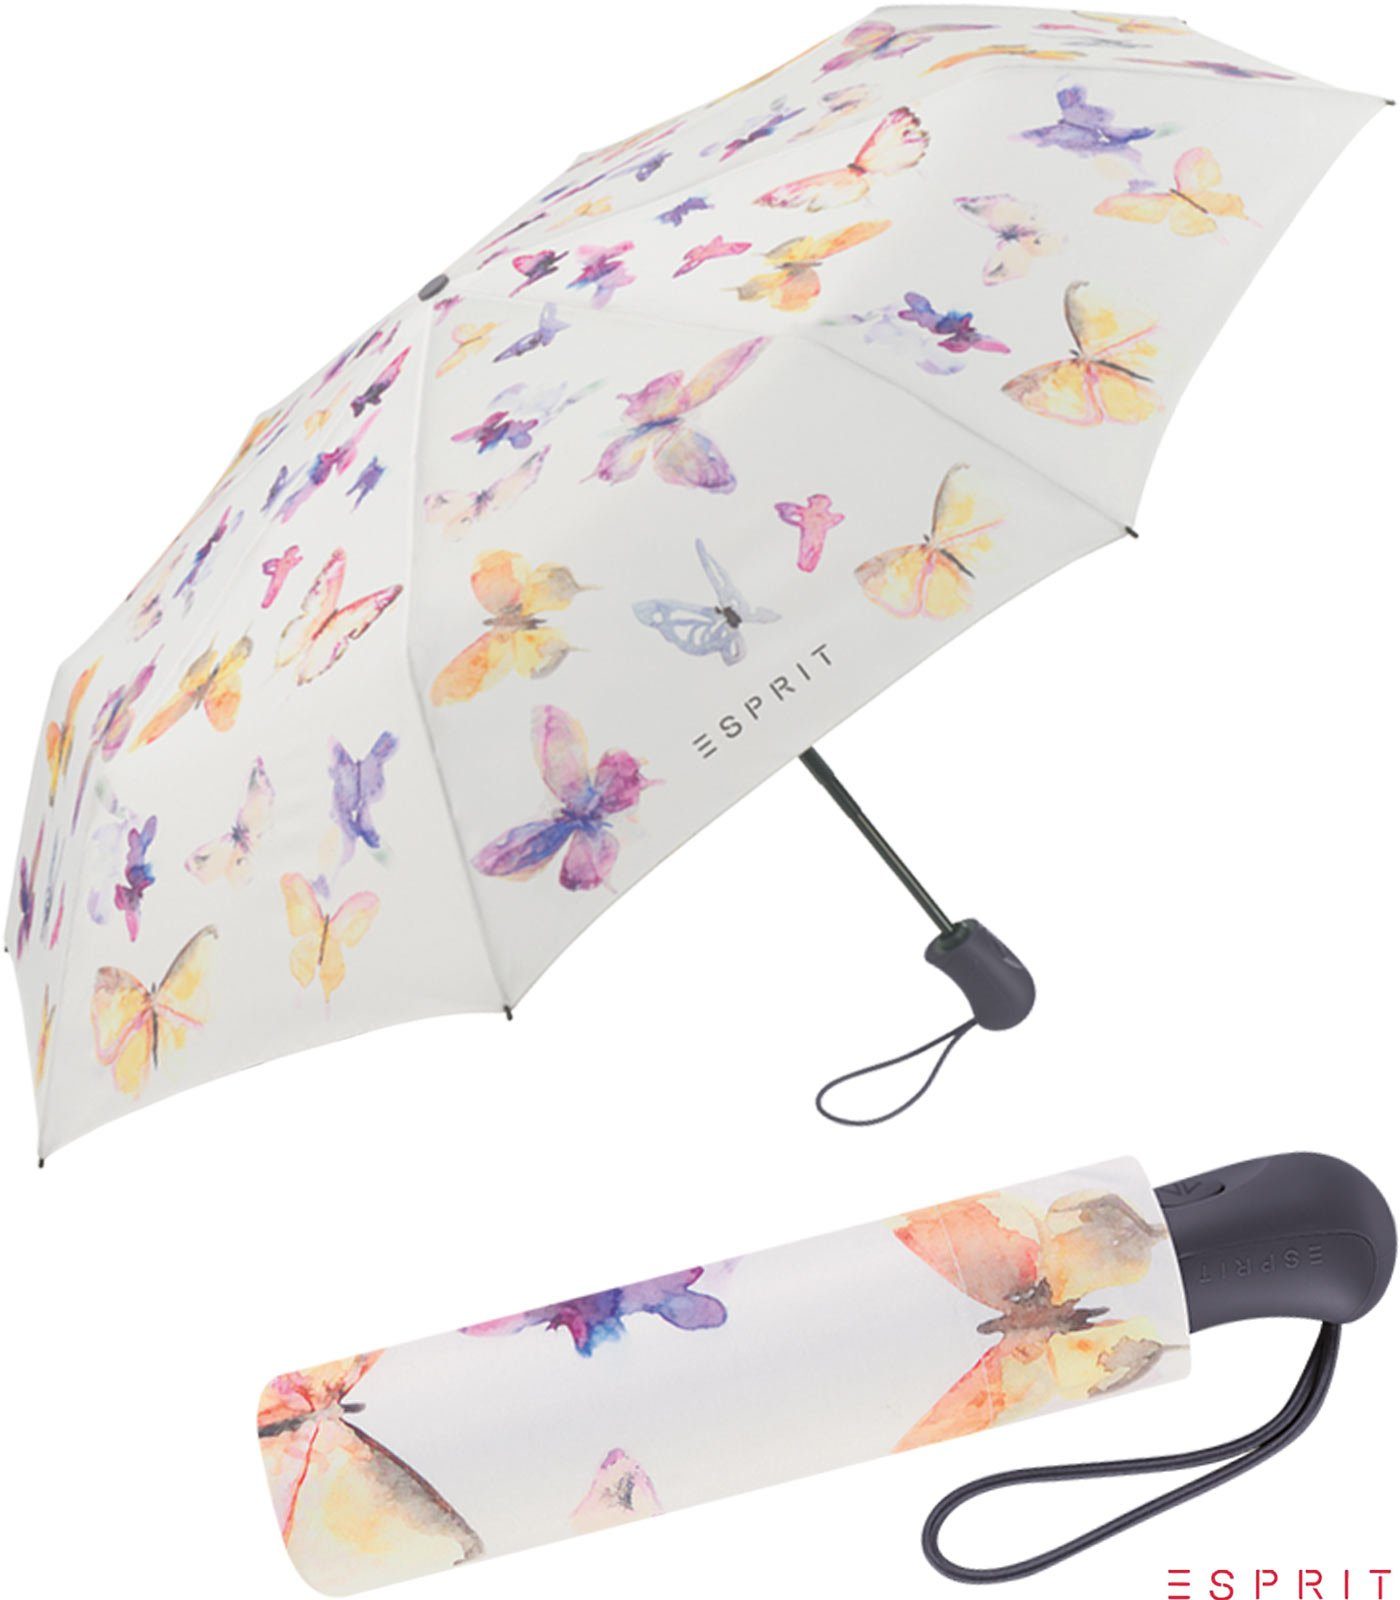 Esprit Langregenschirm Damen-Regenschirm Mini Automatik - Butterfly Dance, stabil-und-praktisch